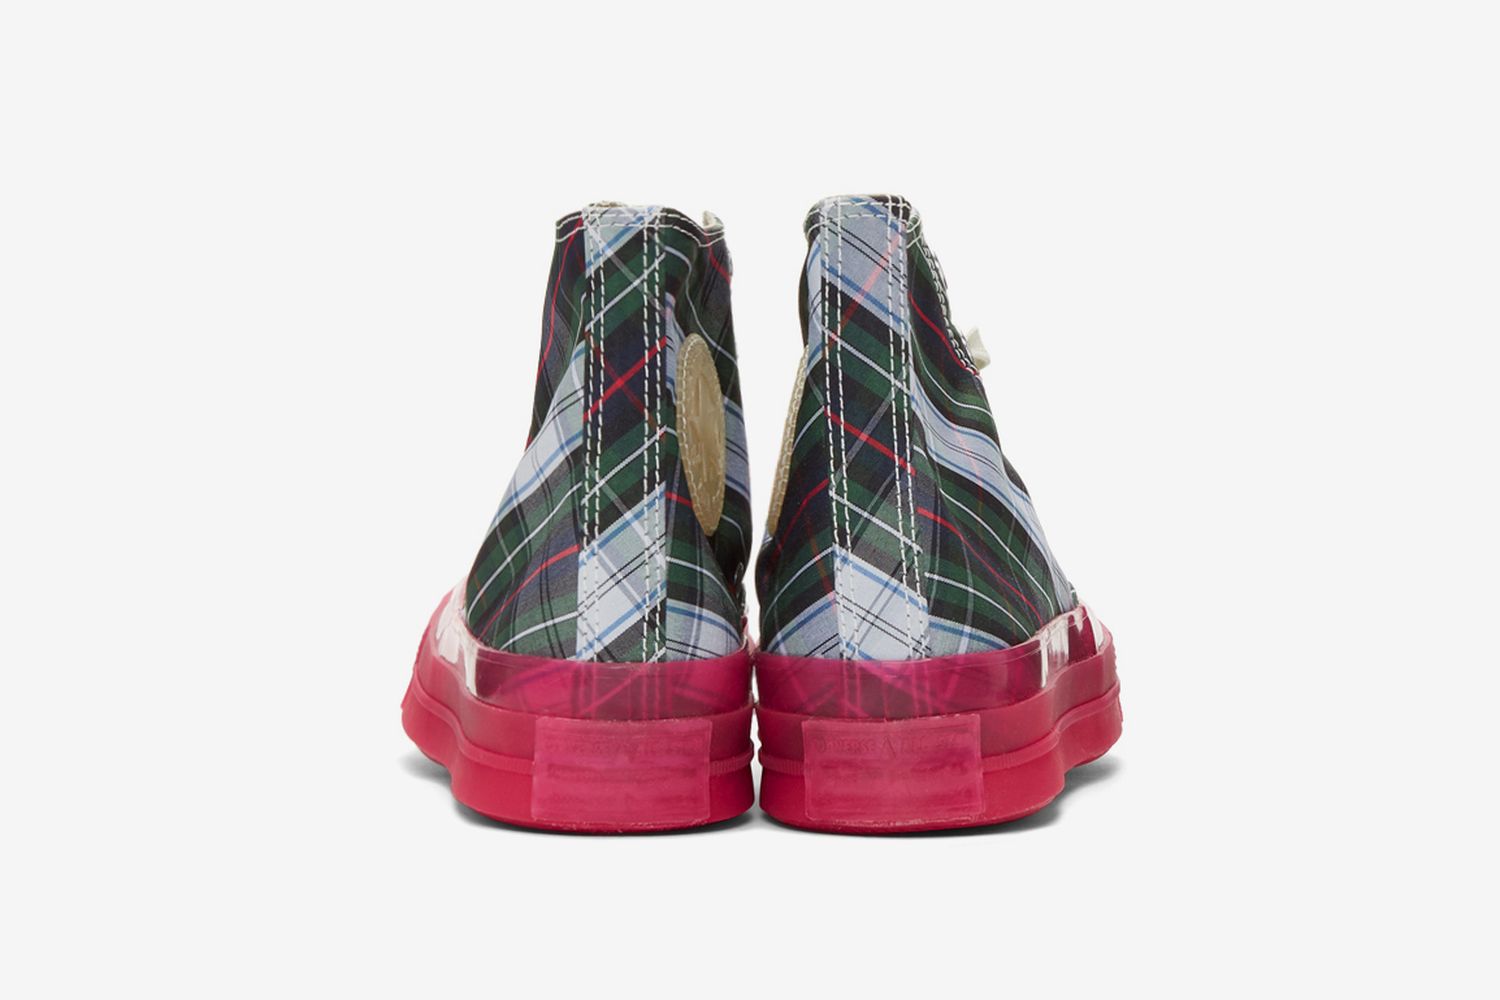 Converse Chuck ’70 Hi Sneakers: Release Date, Price, & More